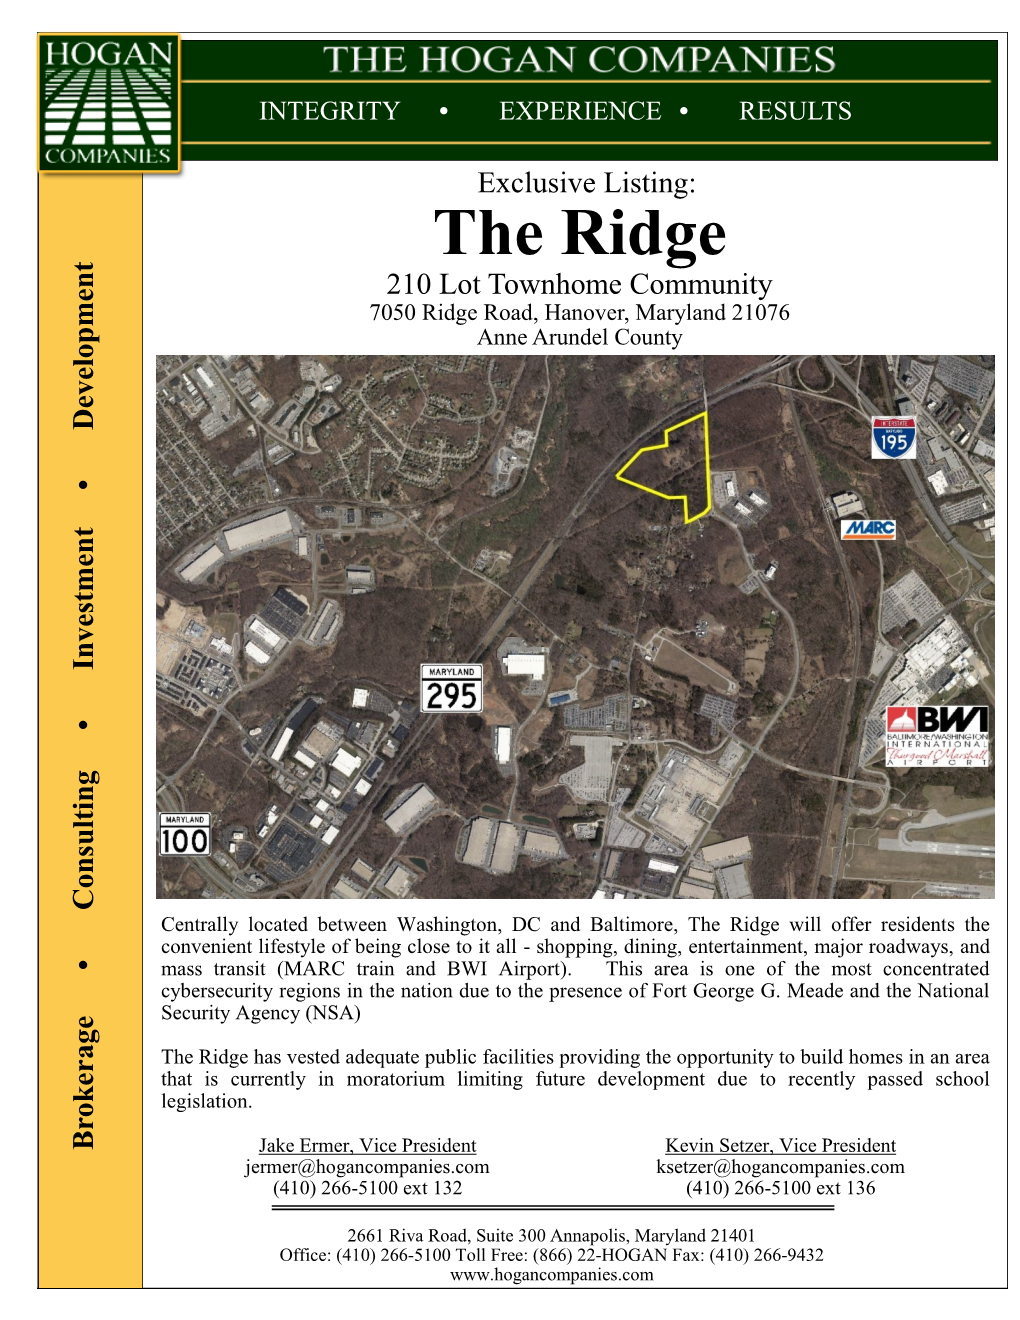 The Ridge 210 Lot Townhome Community 7050 Ridge Road, Hanover, Maryland 21076